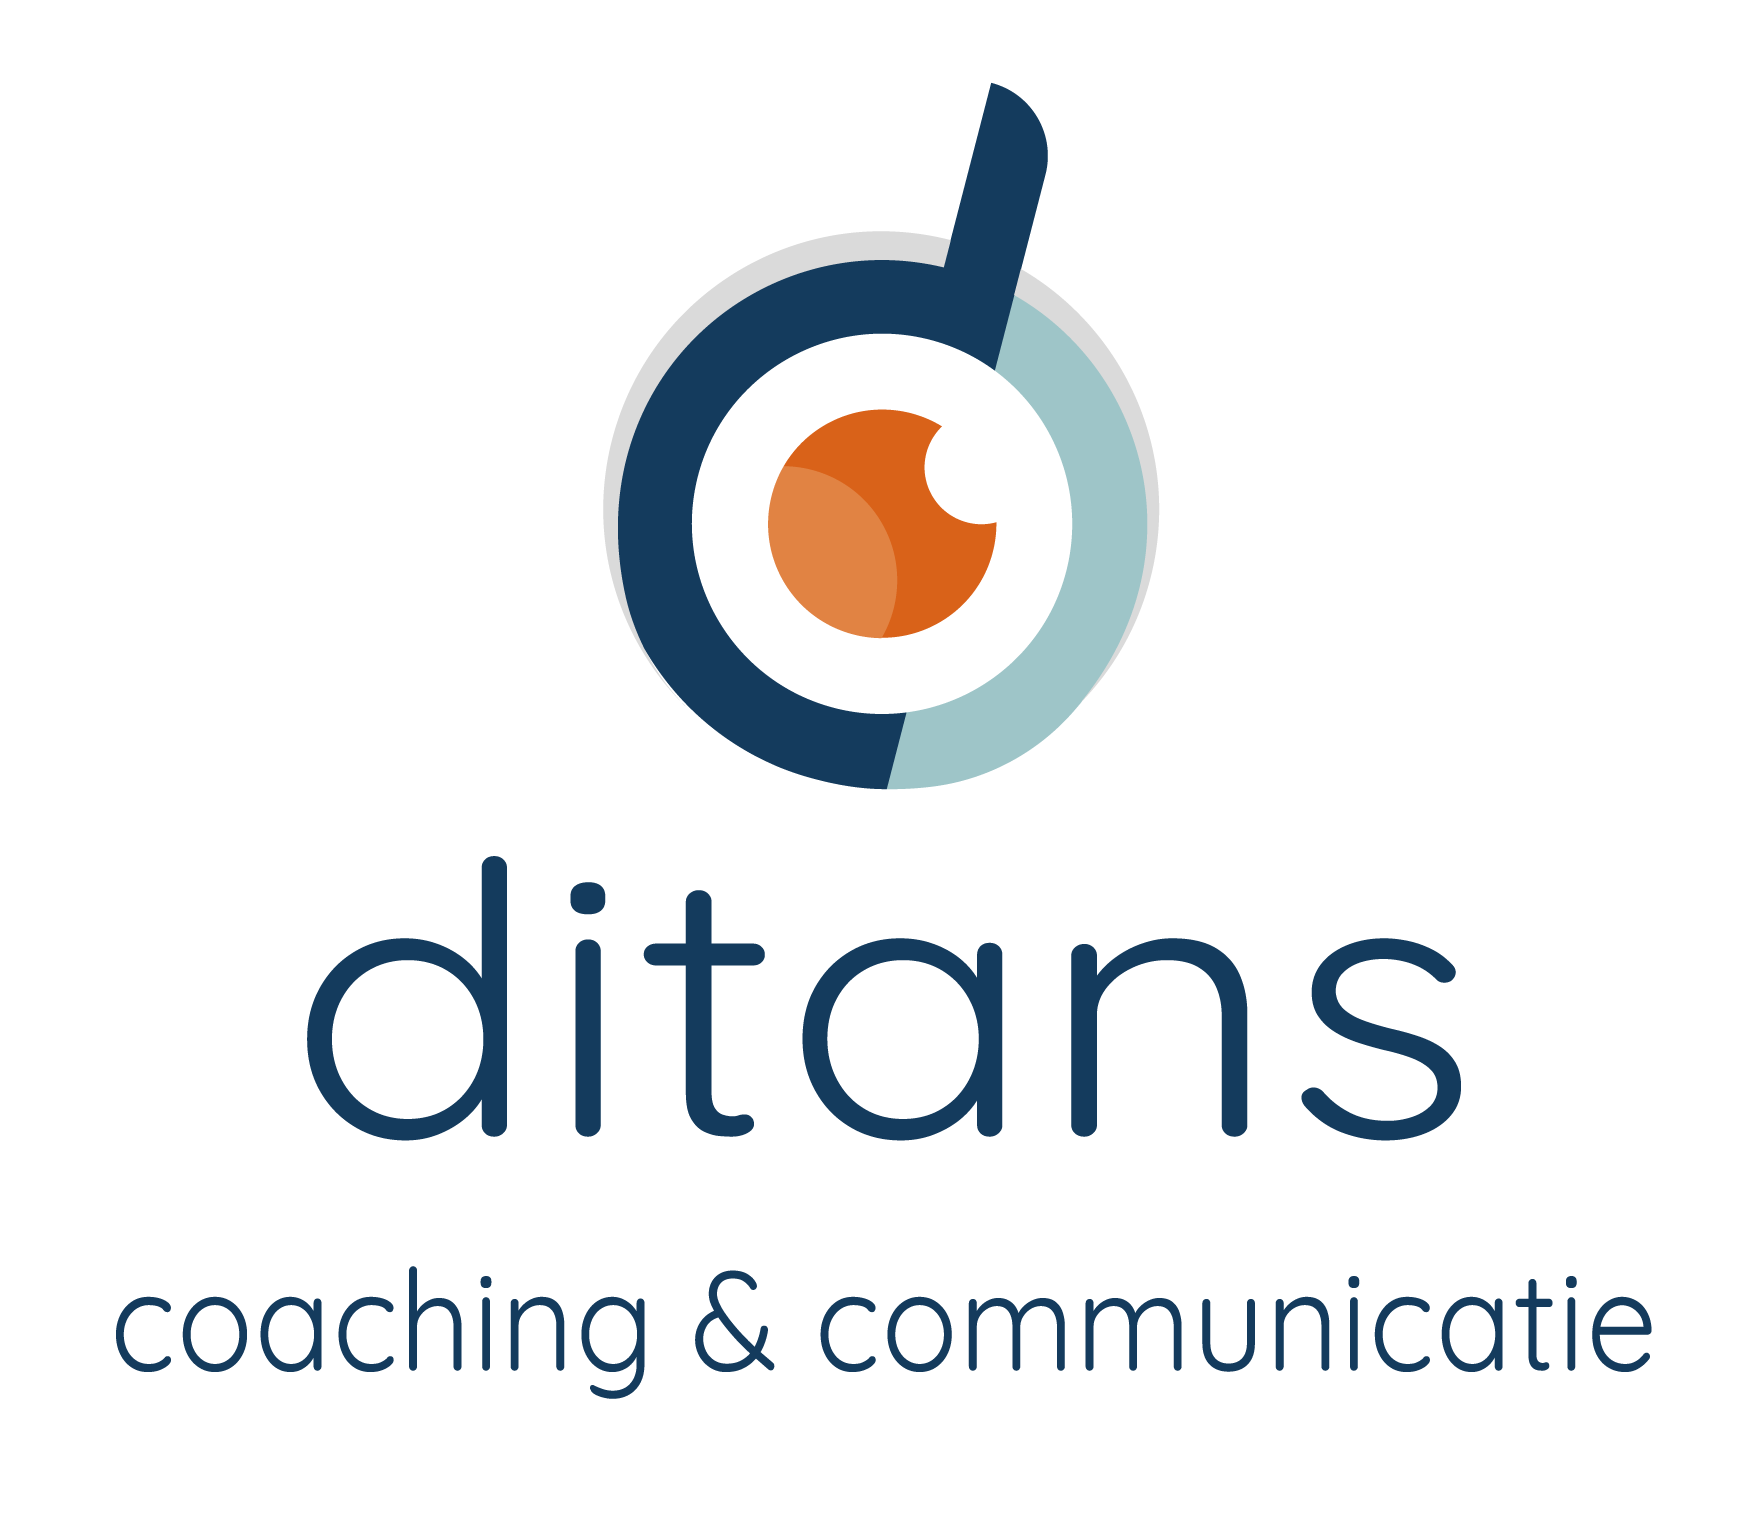 Ditans coaching & communicatie